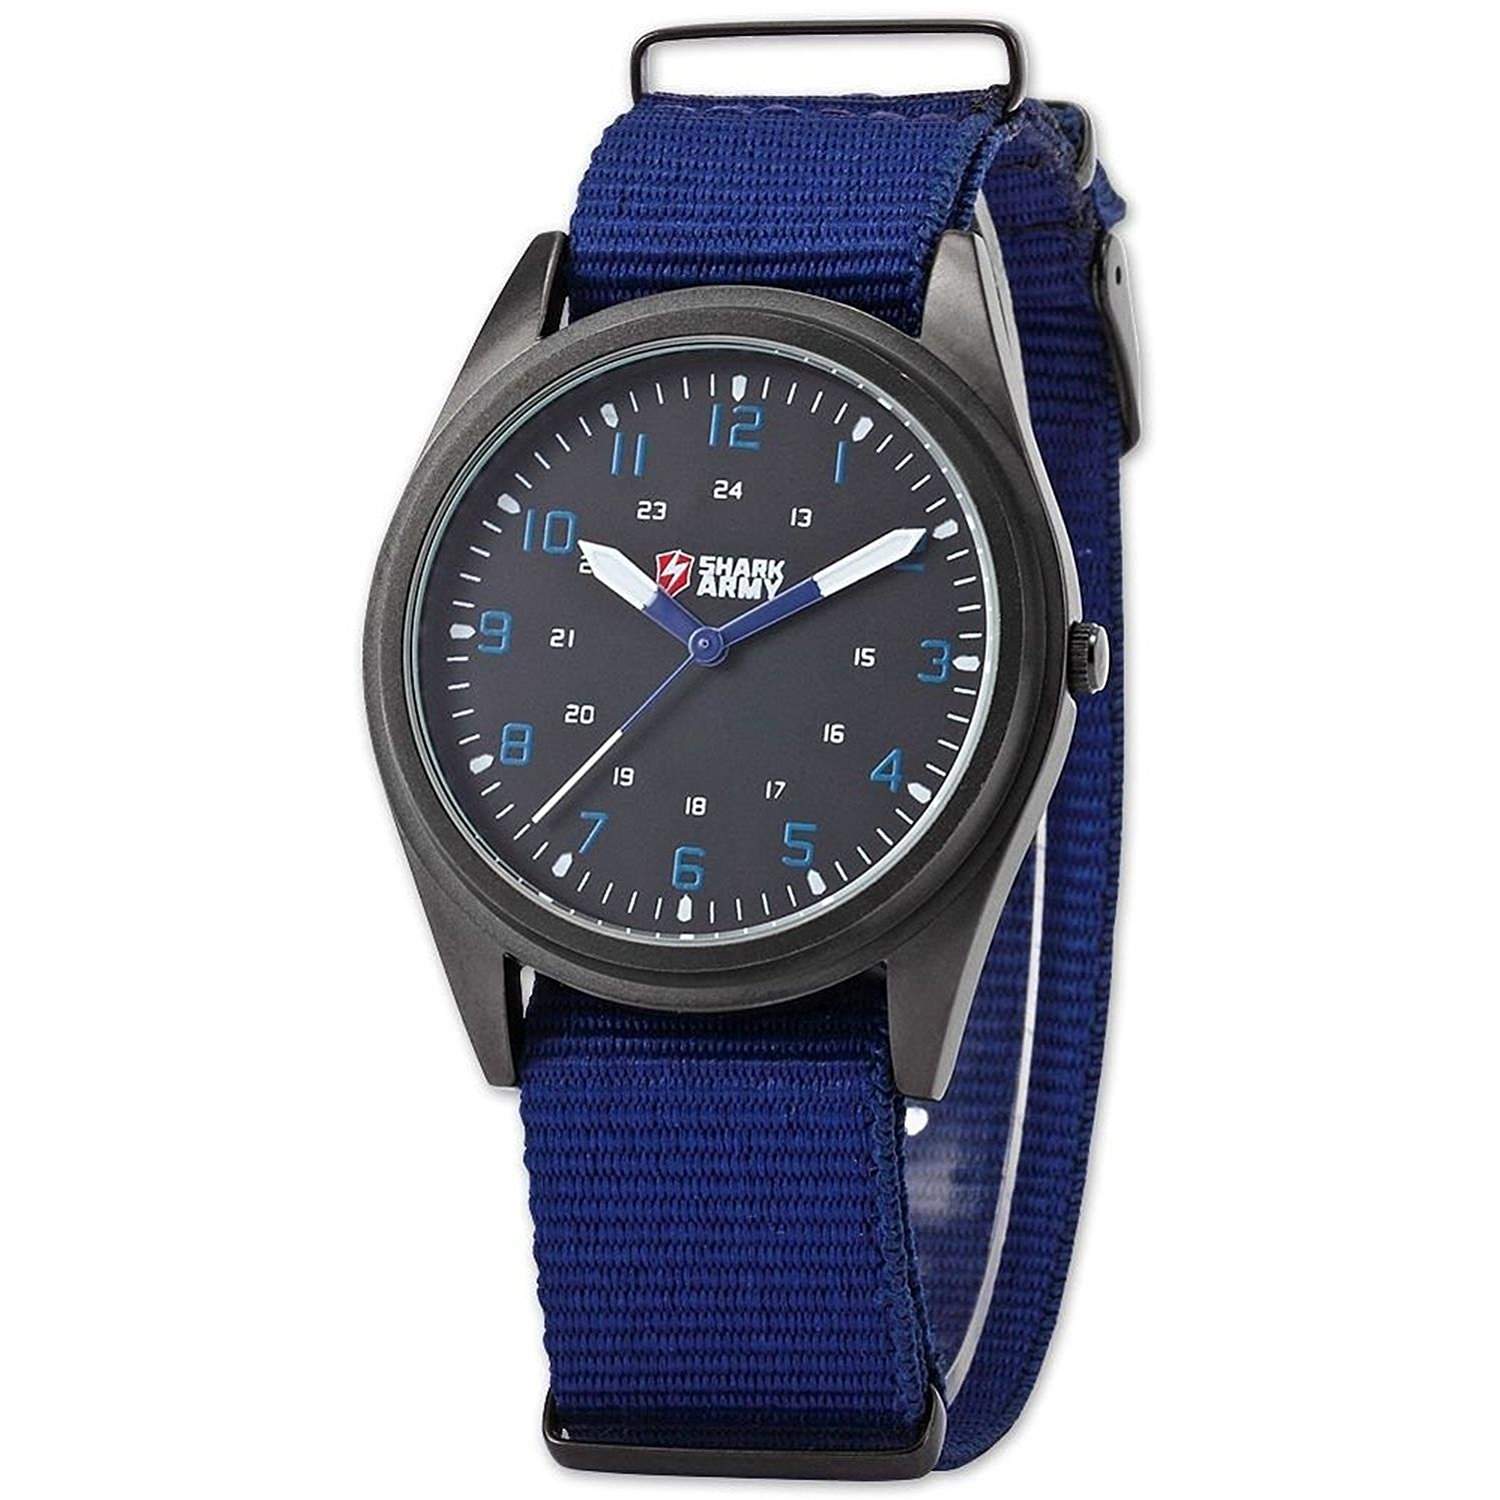 SHARK ARMY Herren Armbanduhr Analog Quarzuhr Blaue Armband aus Nylon SAW040